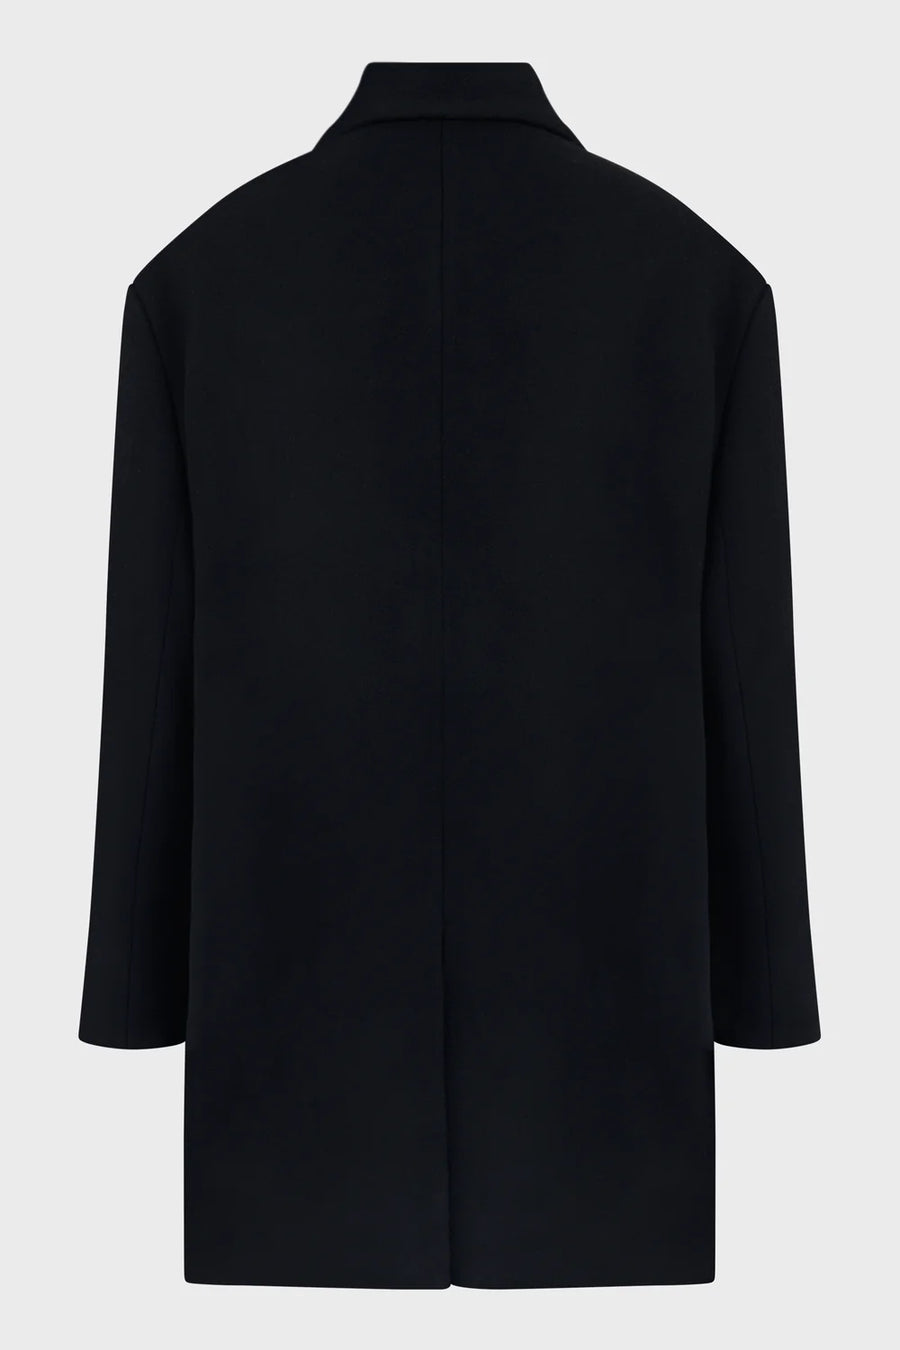 Oversized Notched Lapel Coat in Black by Sean Suen-Idlewild